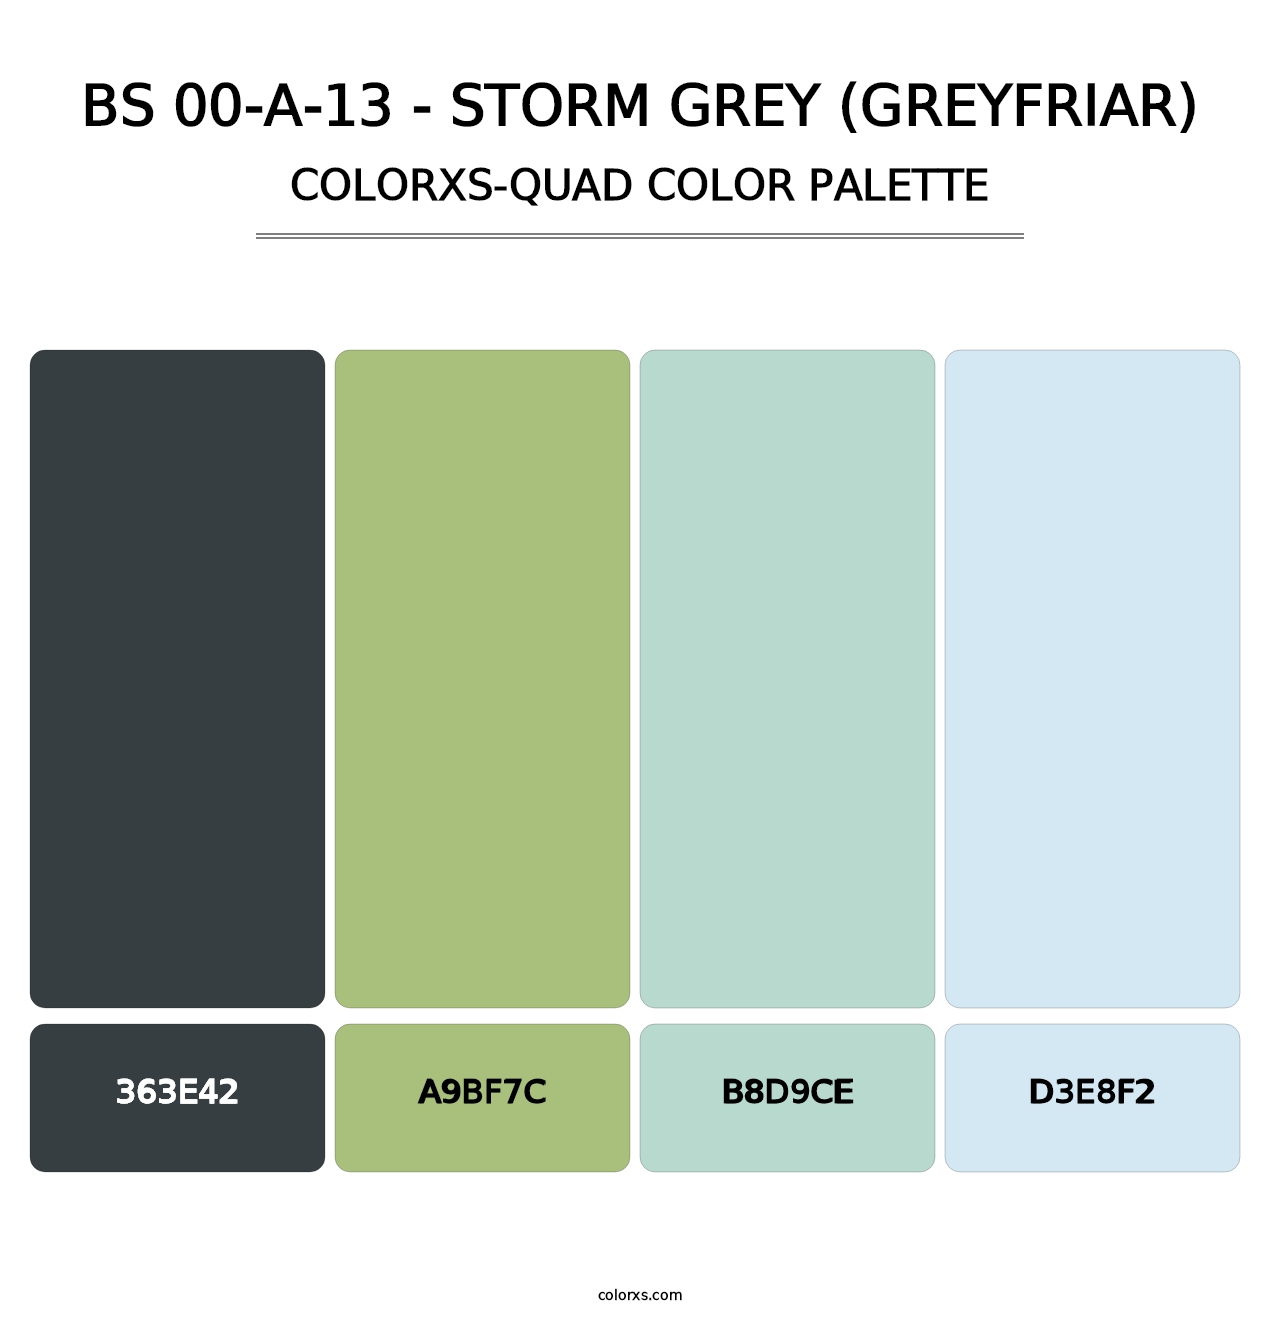 BS 00-A-13 - Storm Grey (Greyfriar) - Colorxs Quad Palette